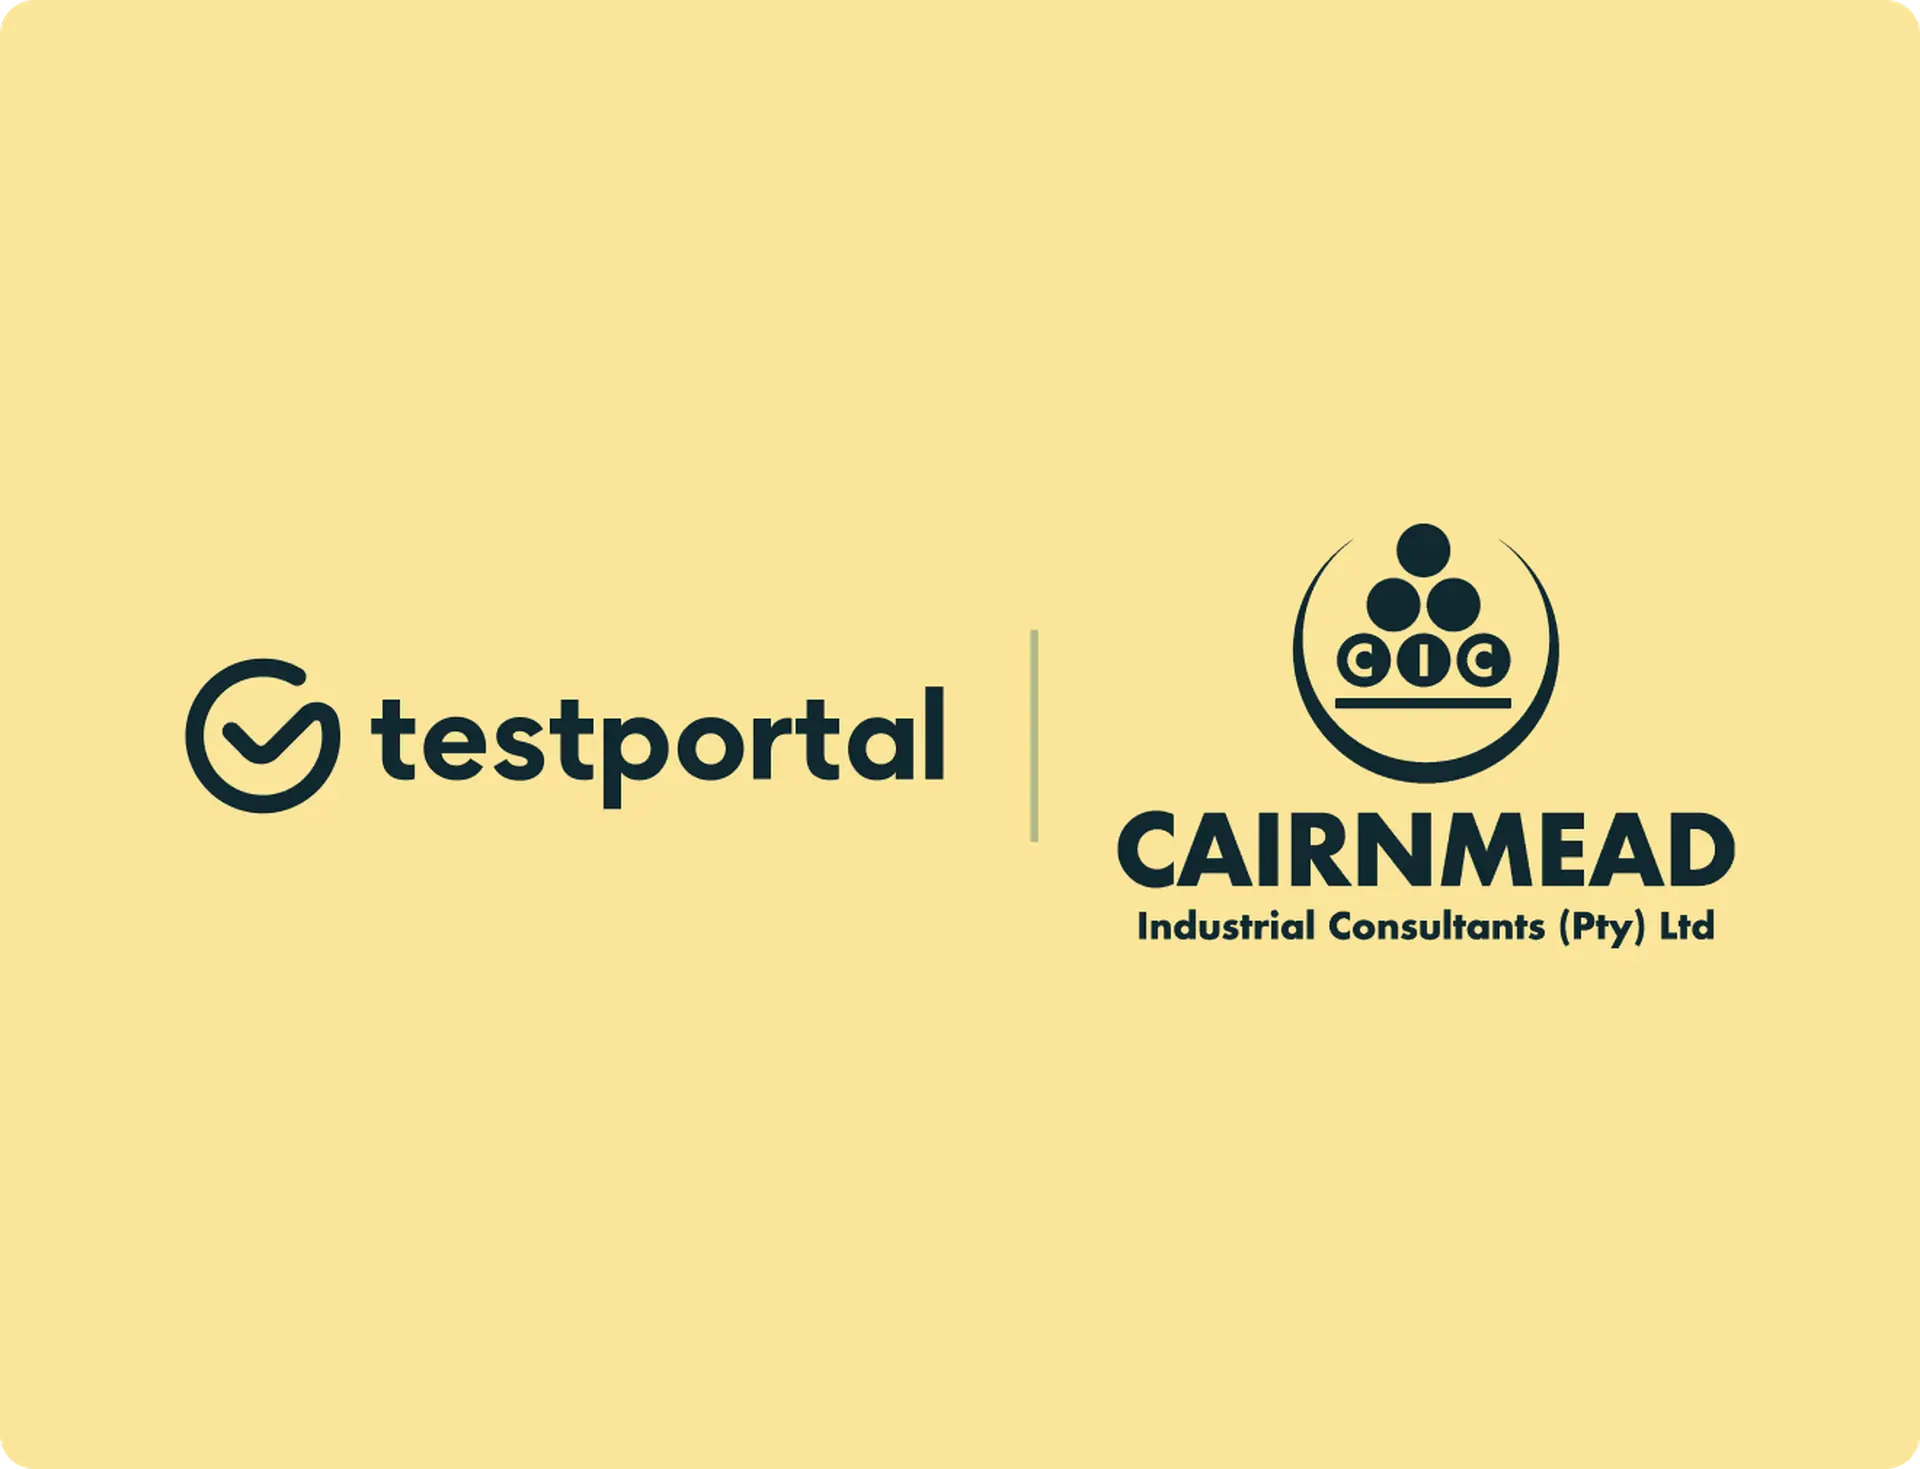 Testportal and Cairnmead logos